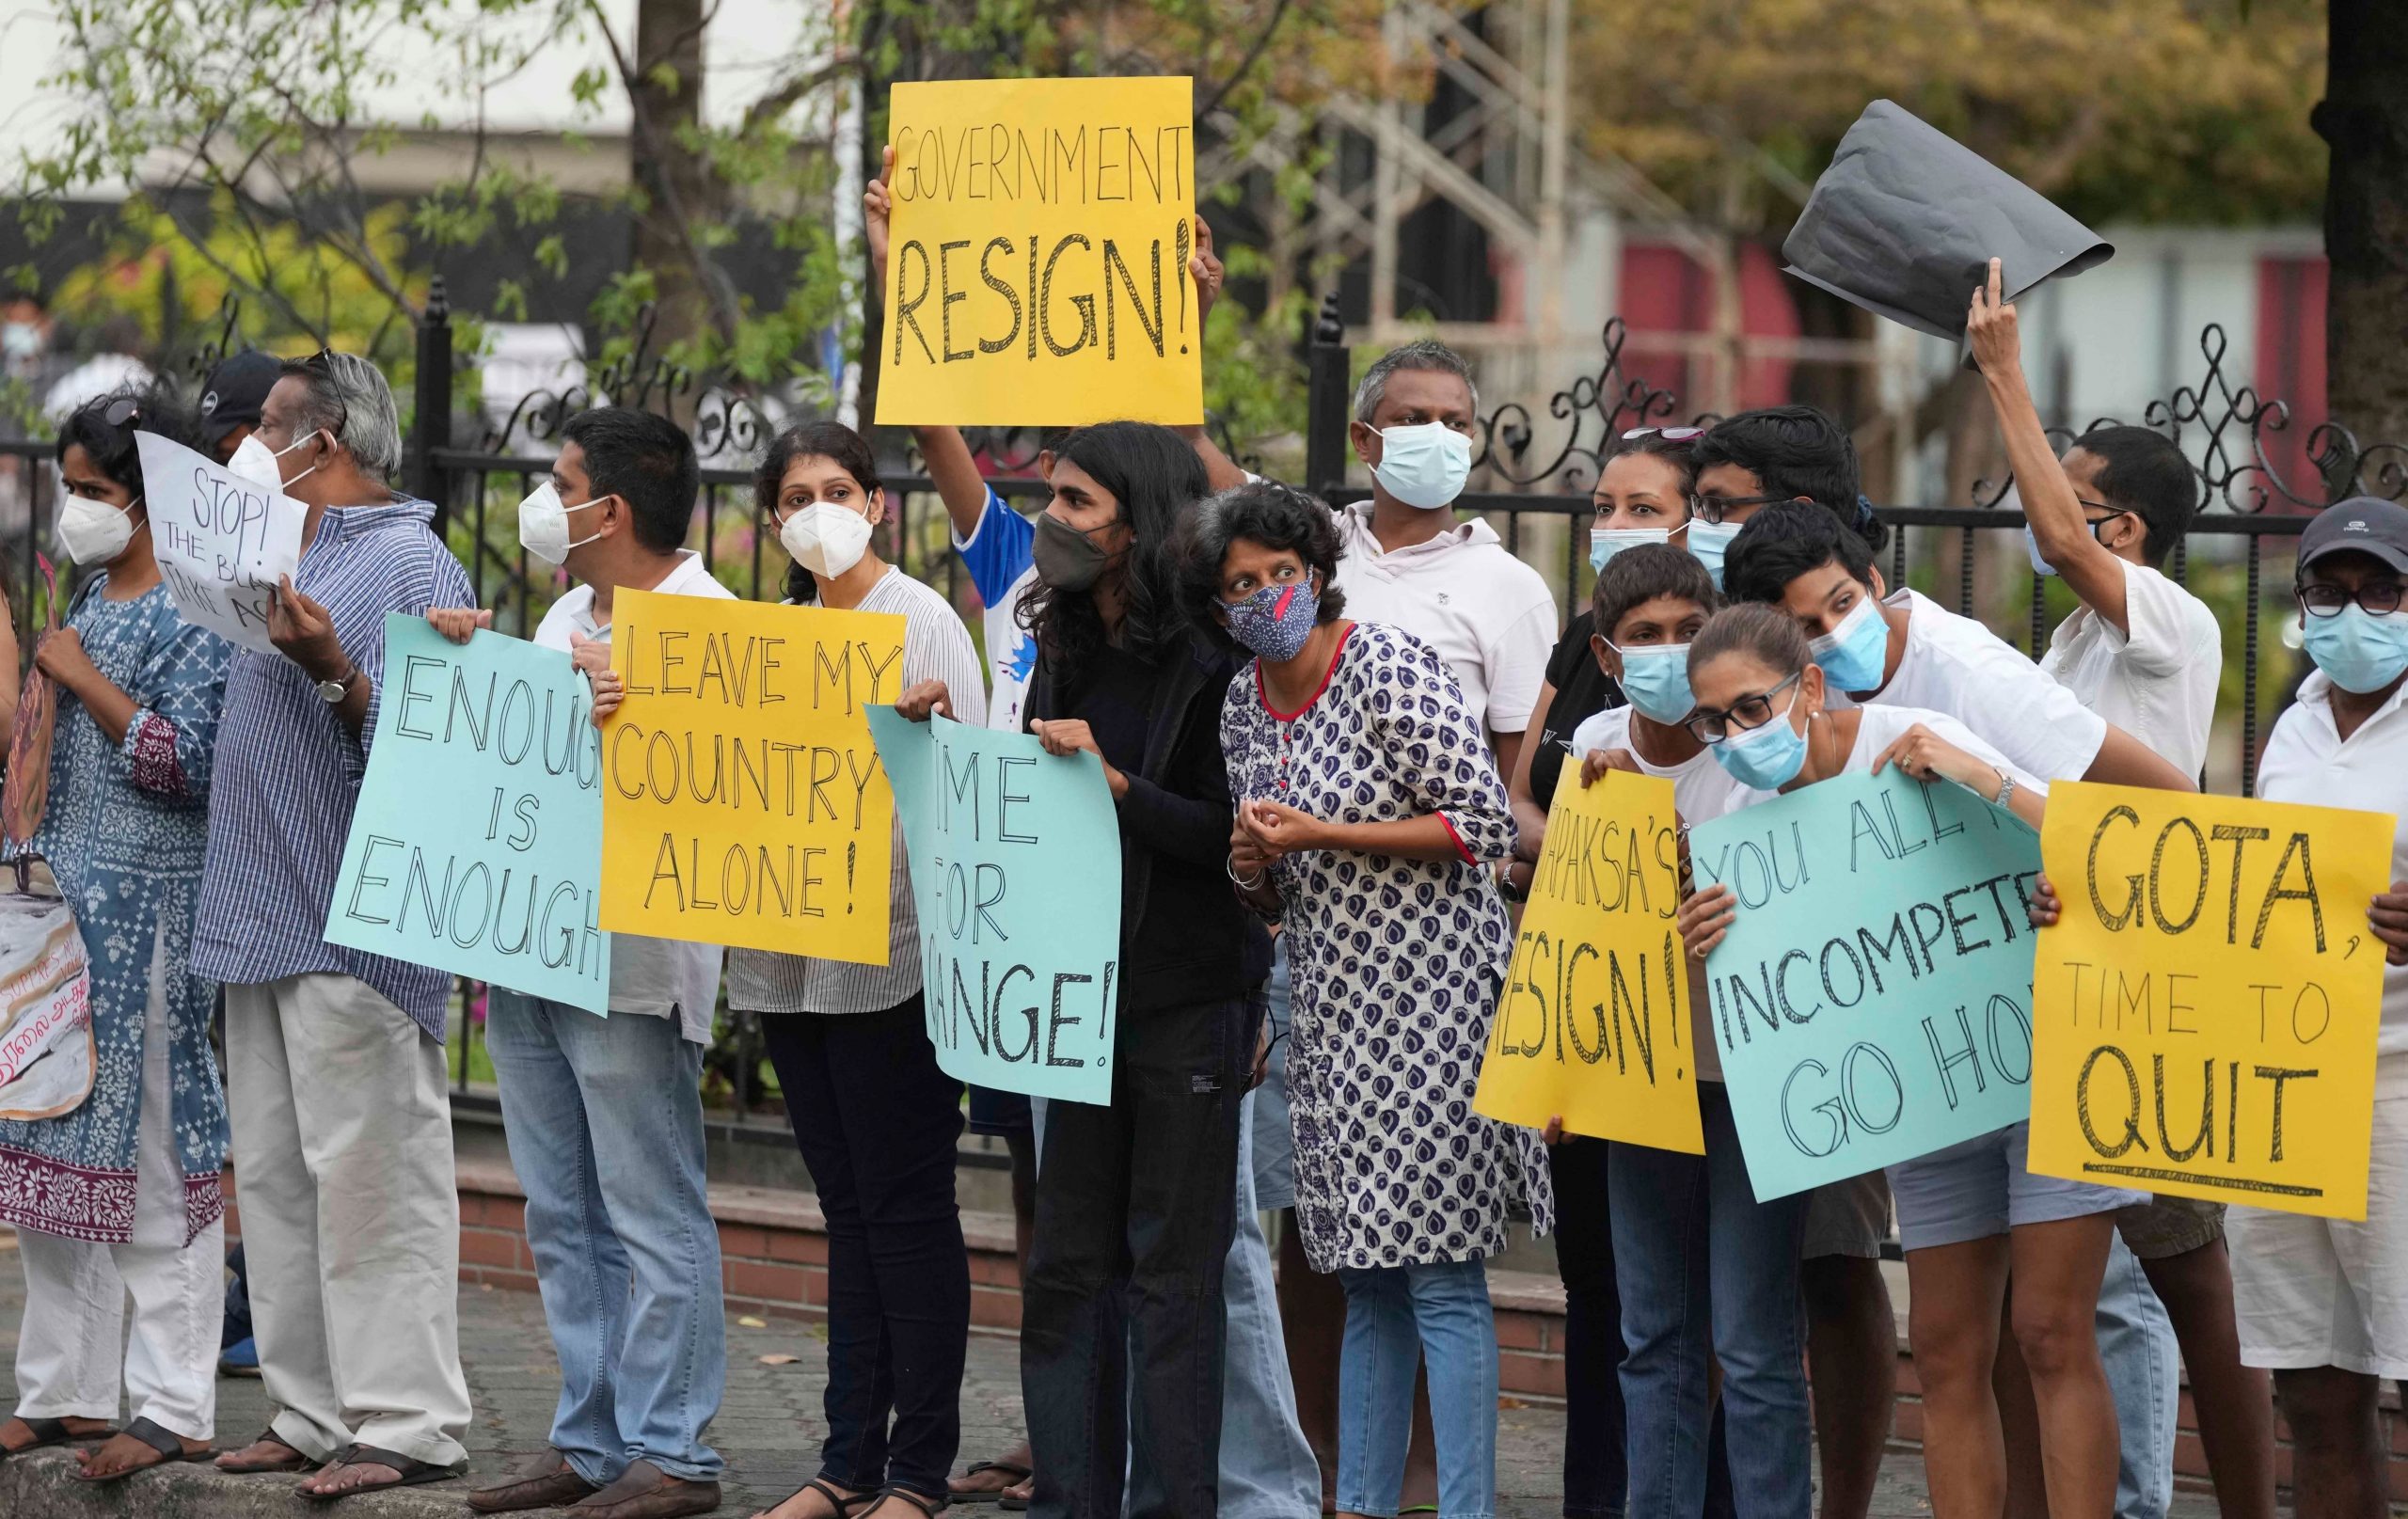 Sri Lanka crisis: What is Gotabaya Rajapaksa’s final destination?